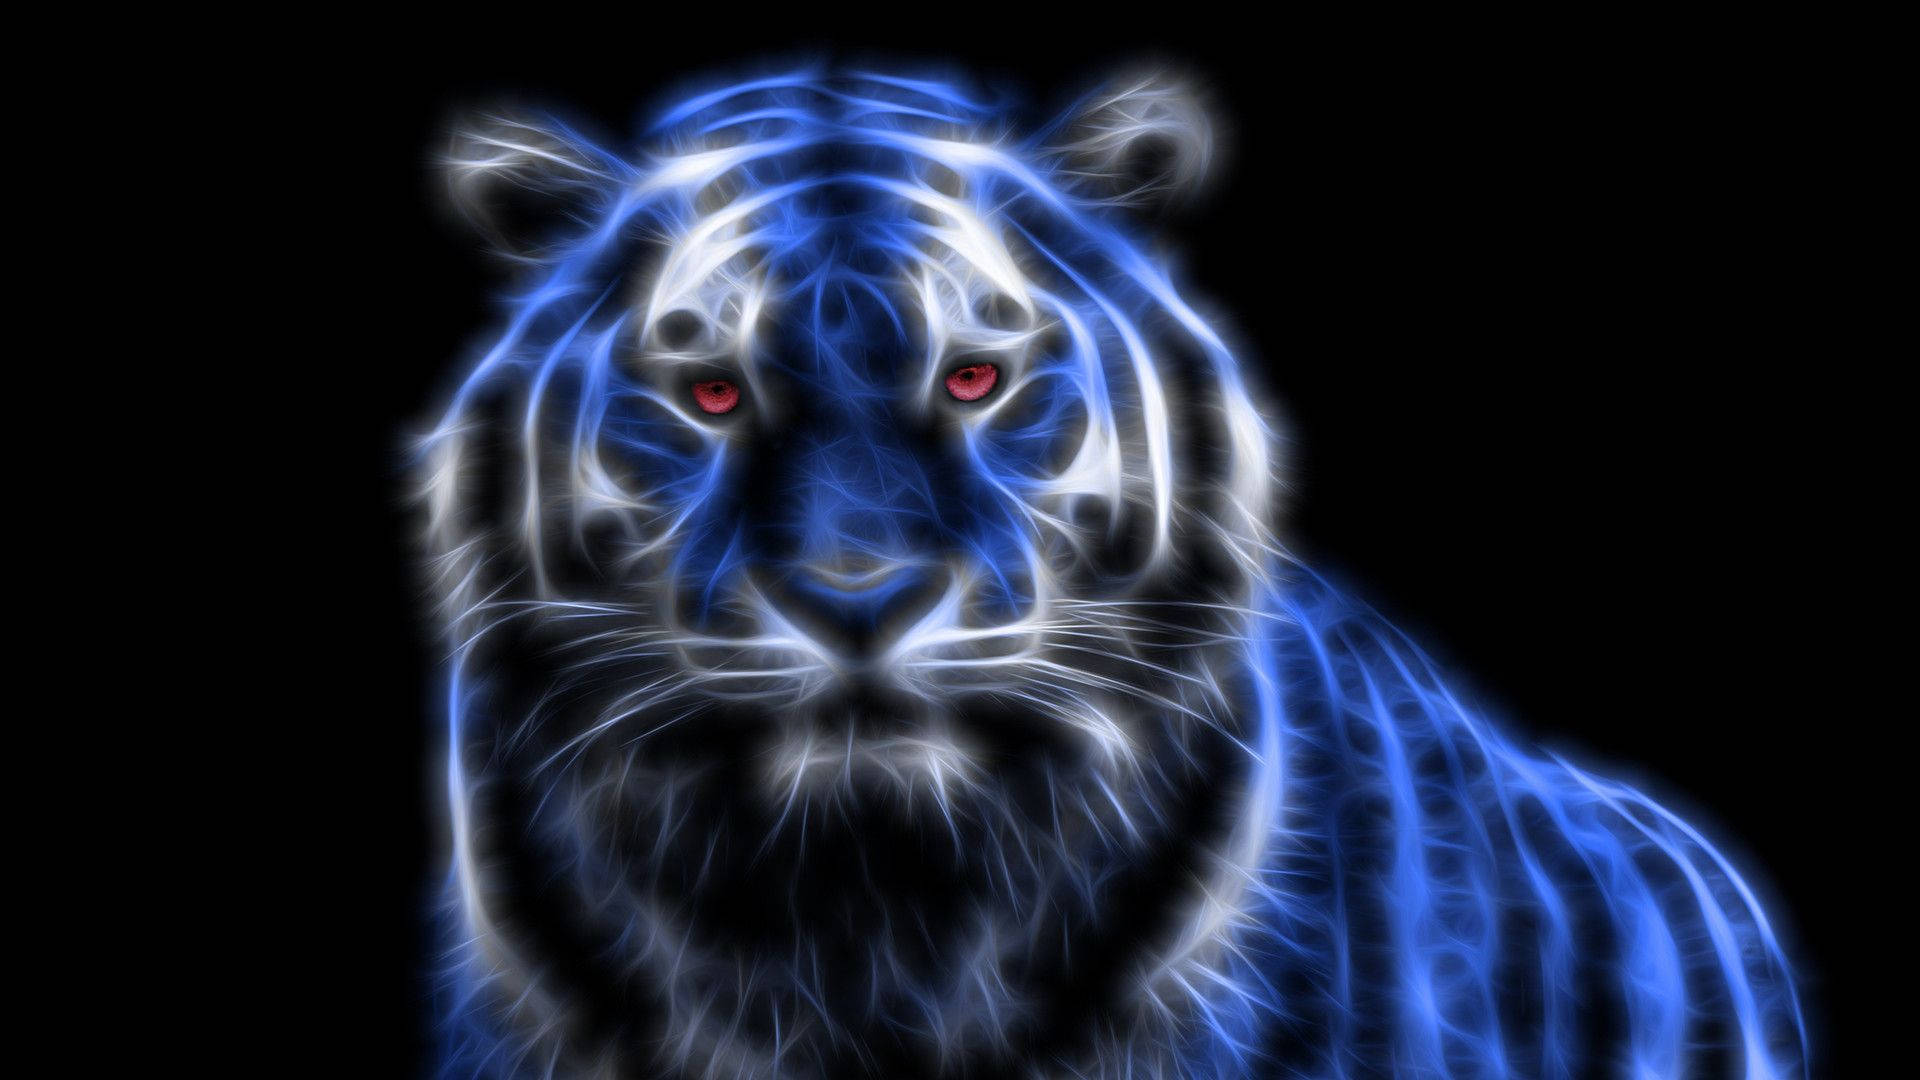 Cool Red-eyed Tiger Wallpaper